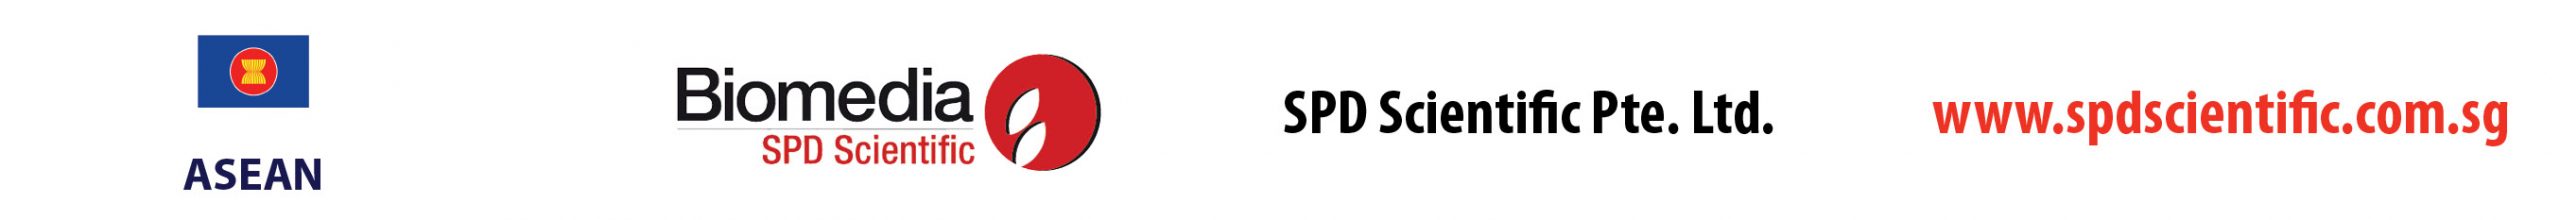 SPD Sci info